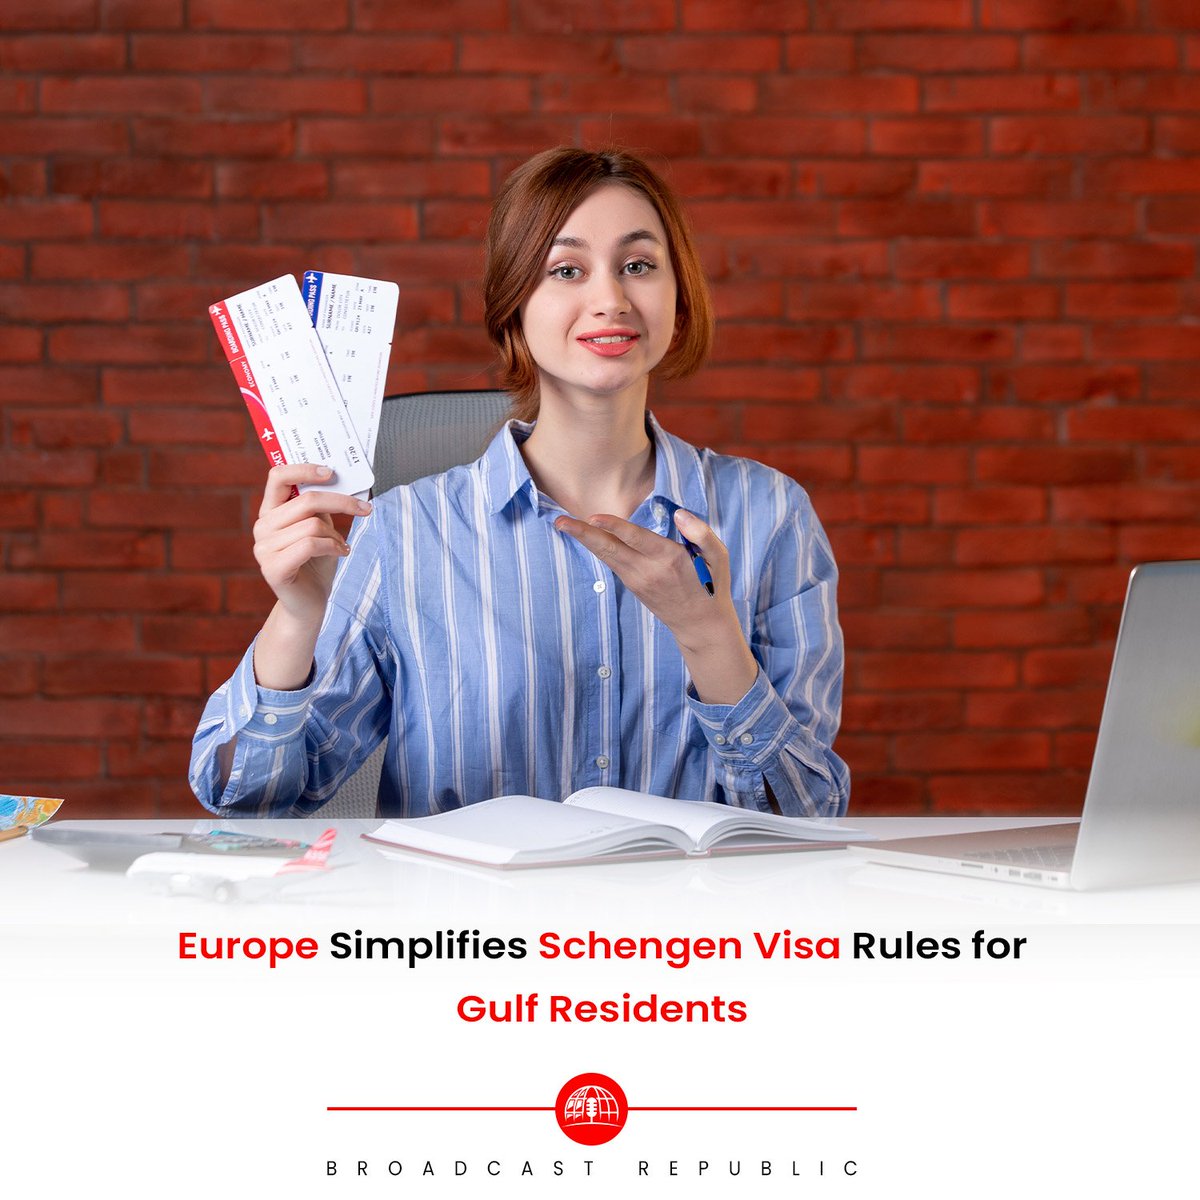 Europe Simplifies Schengen Visa Rules for Gulf Residents.